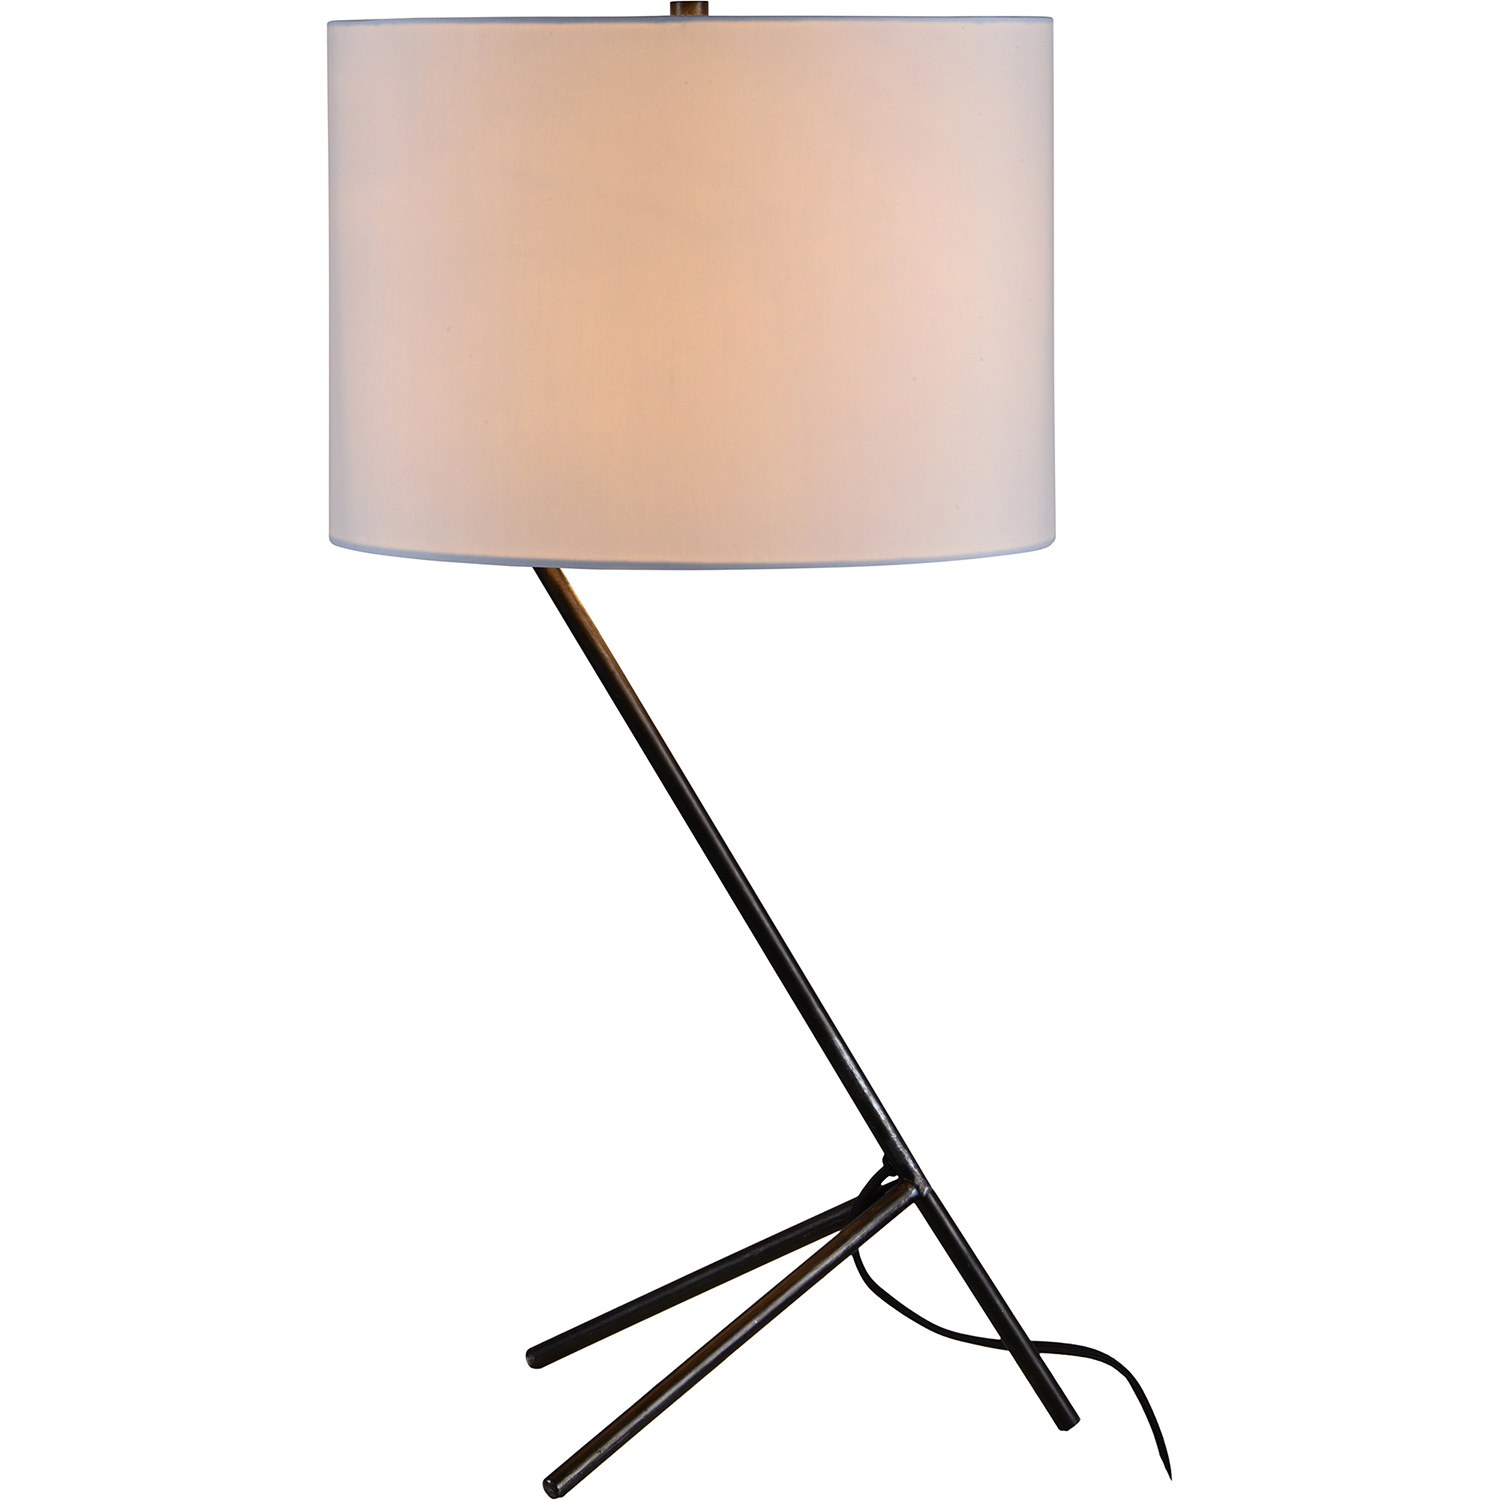 Ren-Wil Wolcott Table Lamp - Graphite Grey